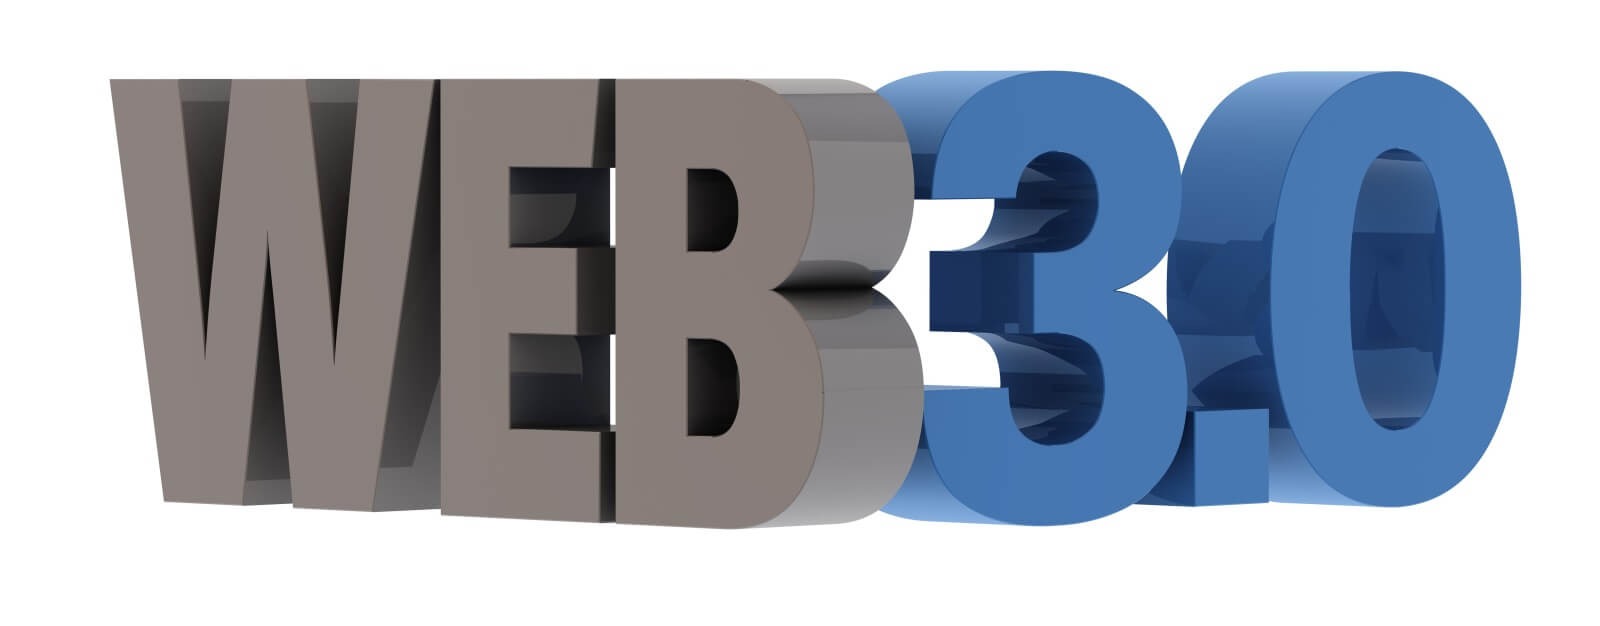 3.0 3.3. Web3. Веб 3.0. Web3 картинка. Web3 логотип.